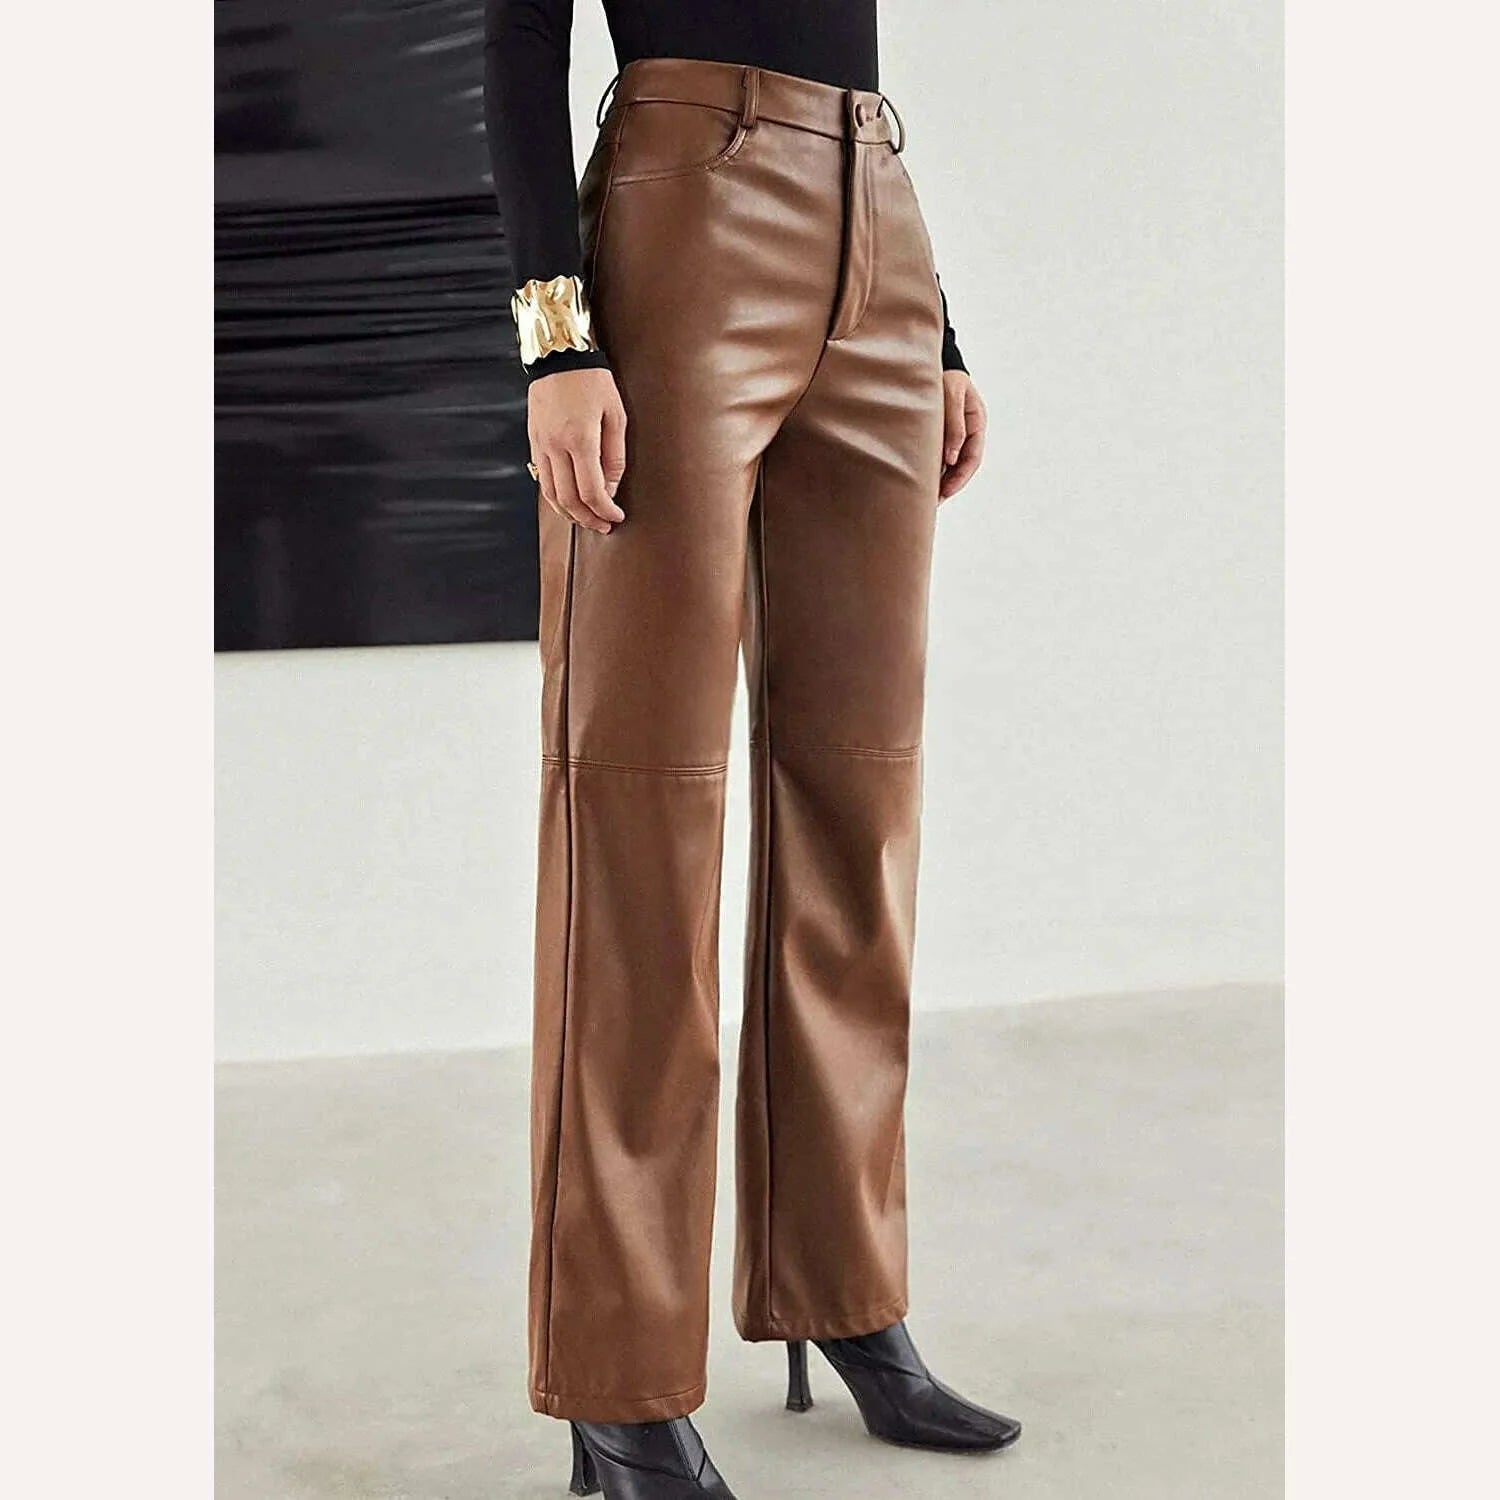 PU Leather Pants High Waist Pockets Women's Green Black Wide Leg Pants 2021 Autumn Winter Fashion New TrousersBlusas Loose Shirt